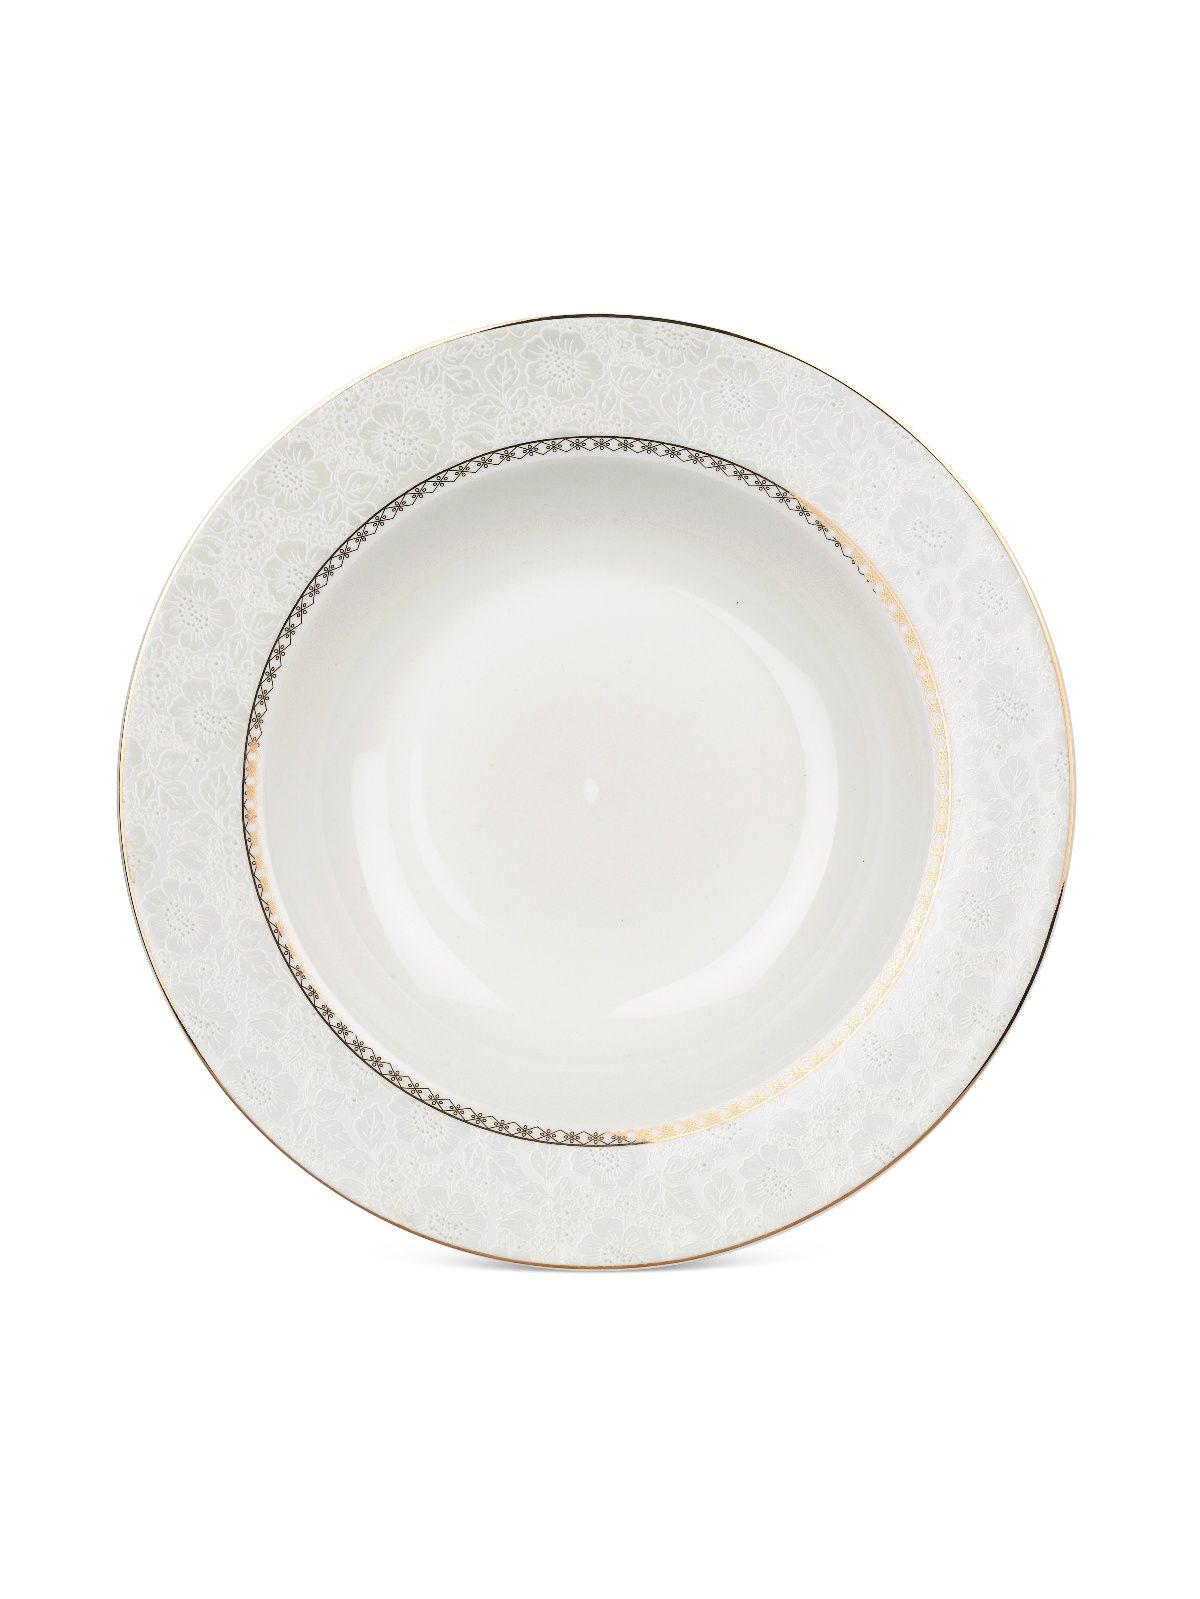 Тарелка суповая ELEGANCE 21.5см FIORETTA TDP612 тарелка суповая fioretta golden queen cn1479 23см